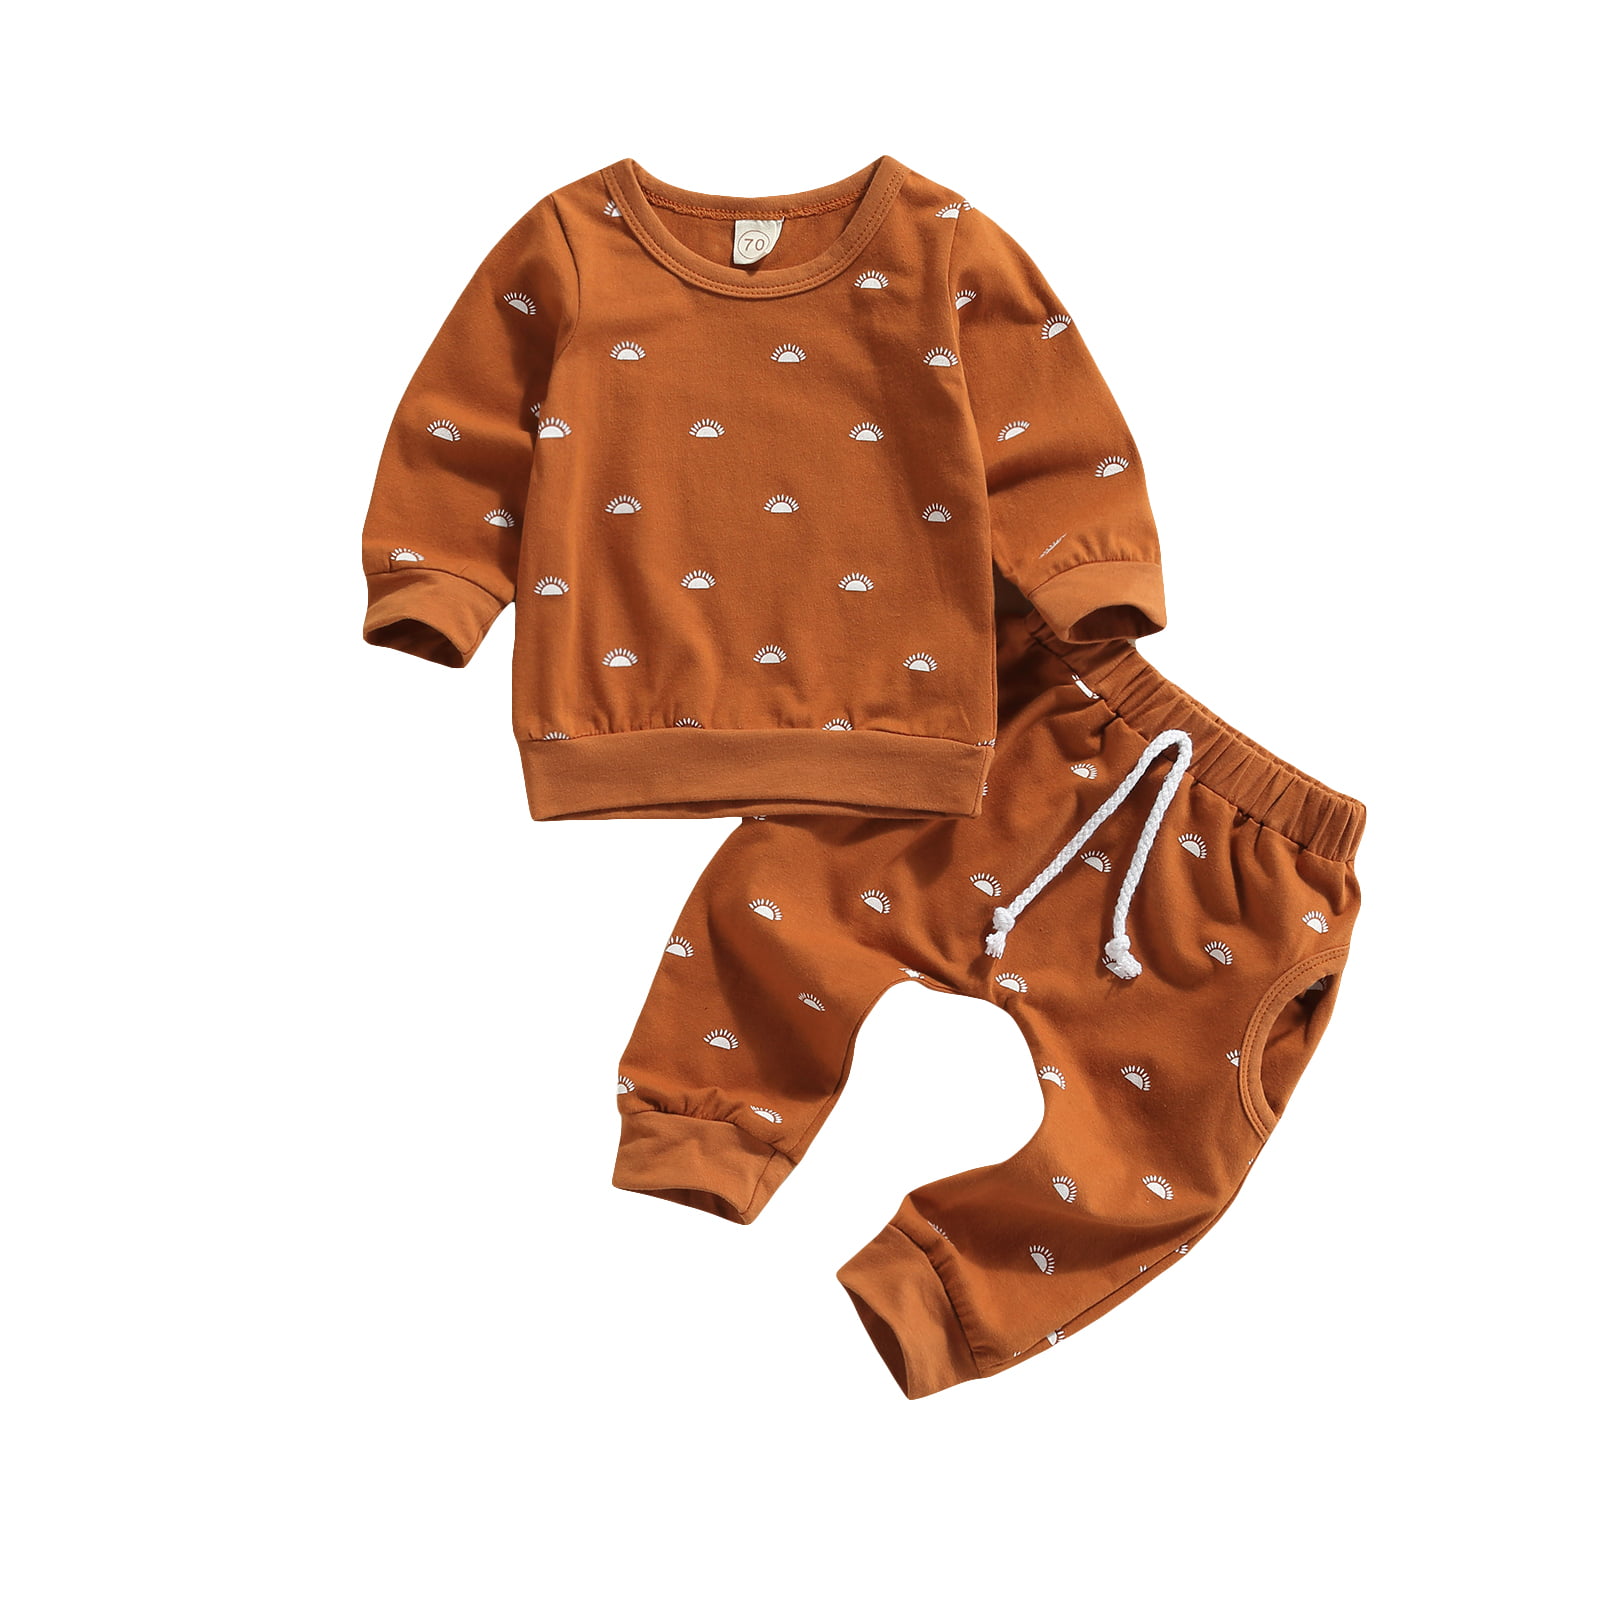 2 Piece Baby Boys Cotton Top & Joggers Set Outfit Newborn 1 3-6 6-9 9-12 Months 